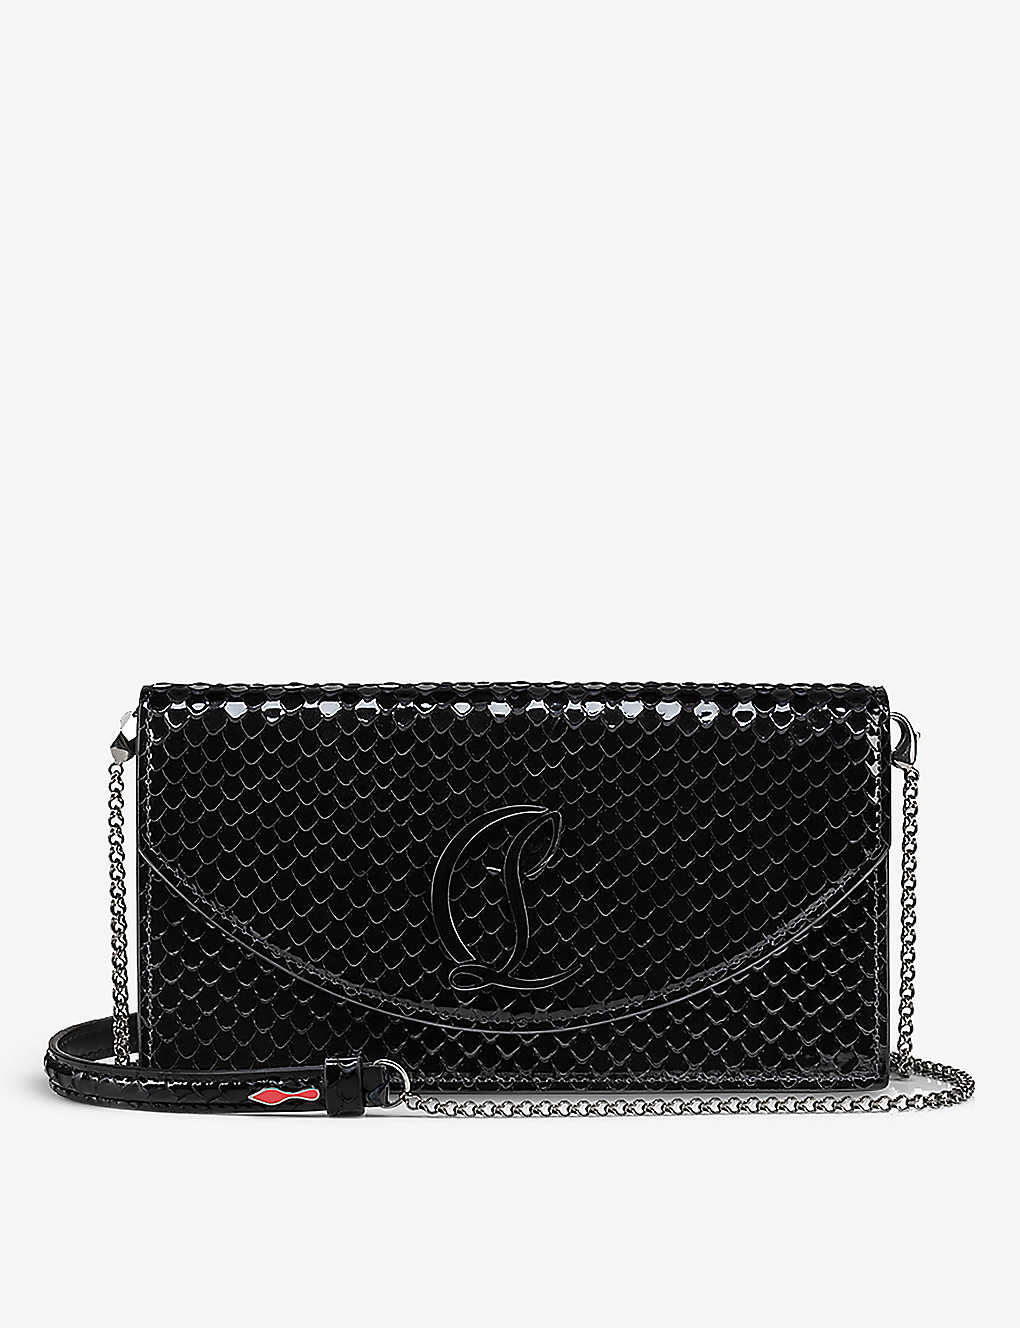 Christian Louboutin Womens Black Loubi54 Leather Clutch Bag 1 Size